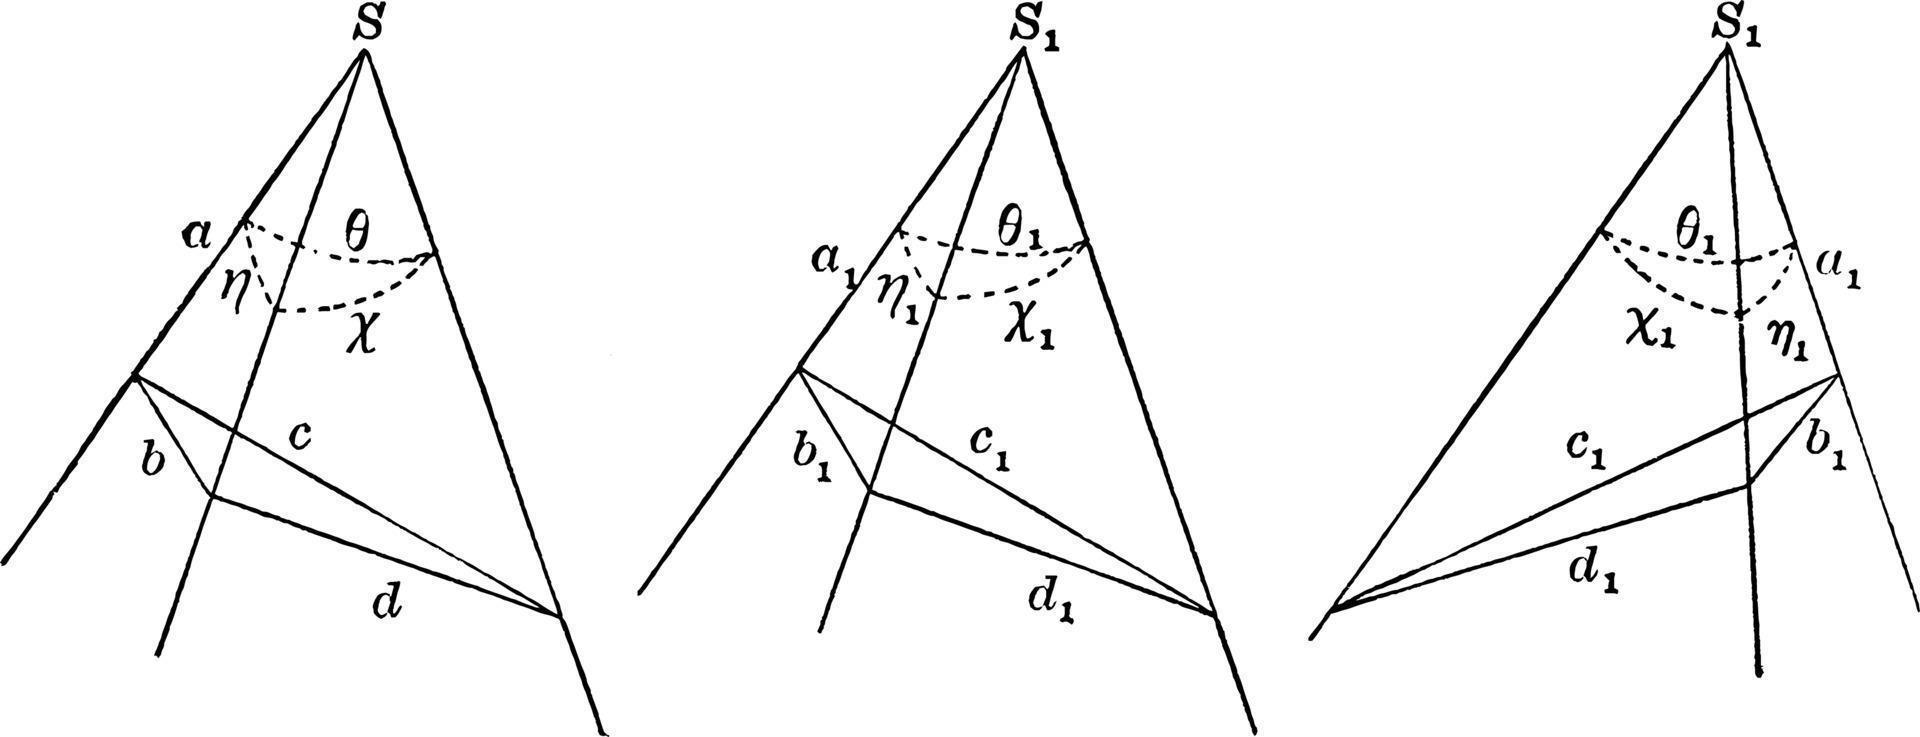 ângulos triédricos simétricos, ilustração vintage. vetor